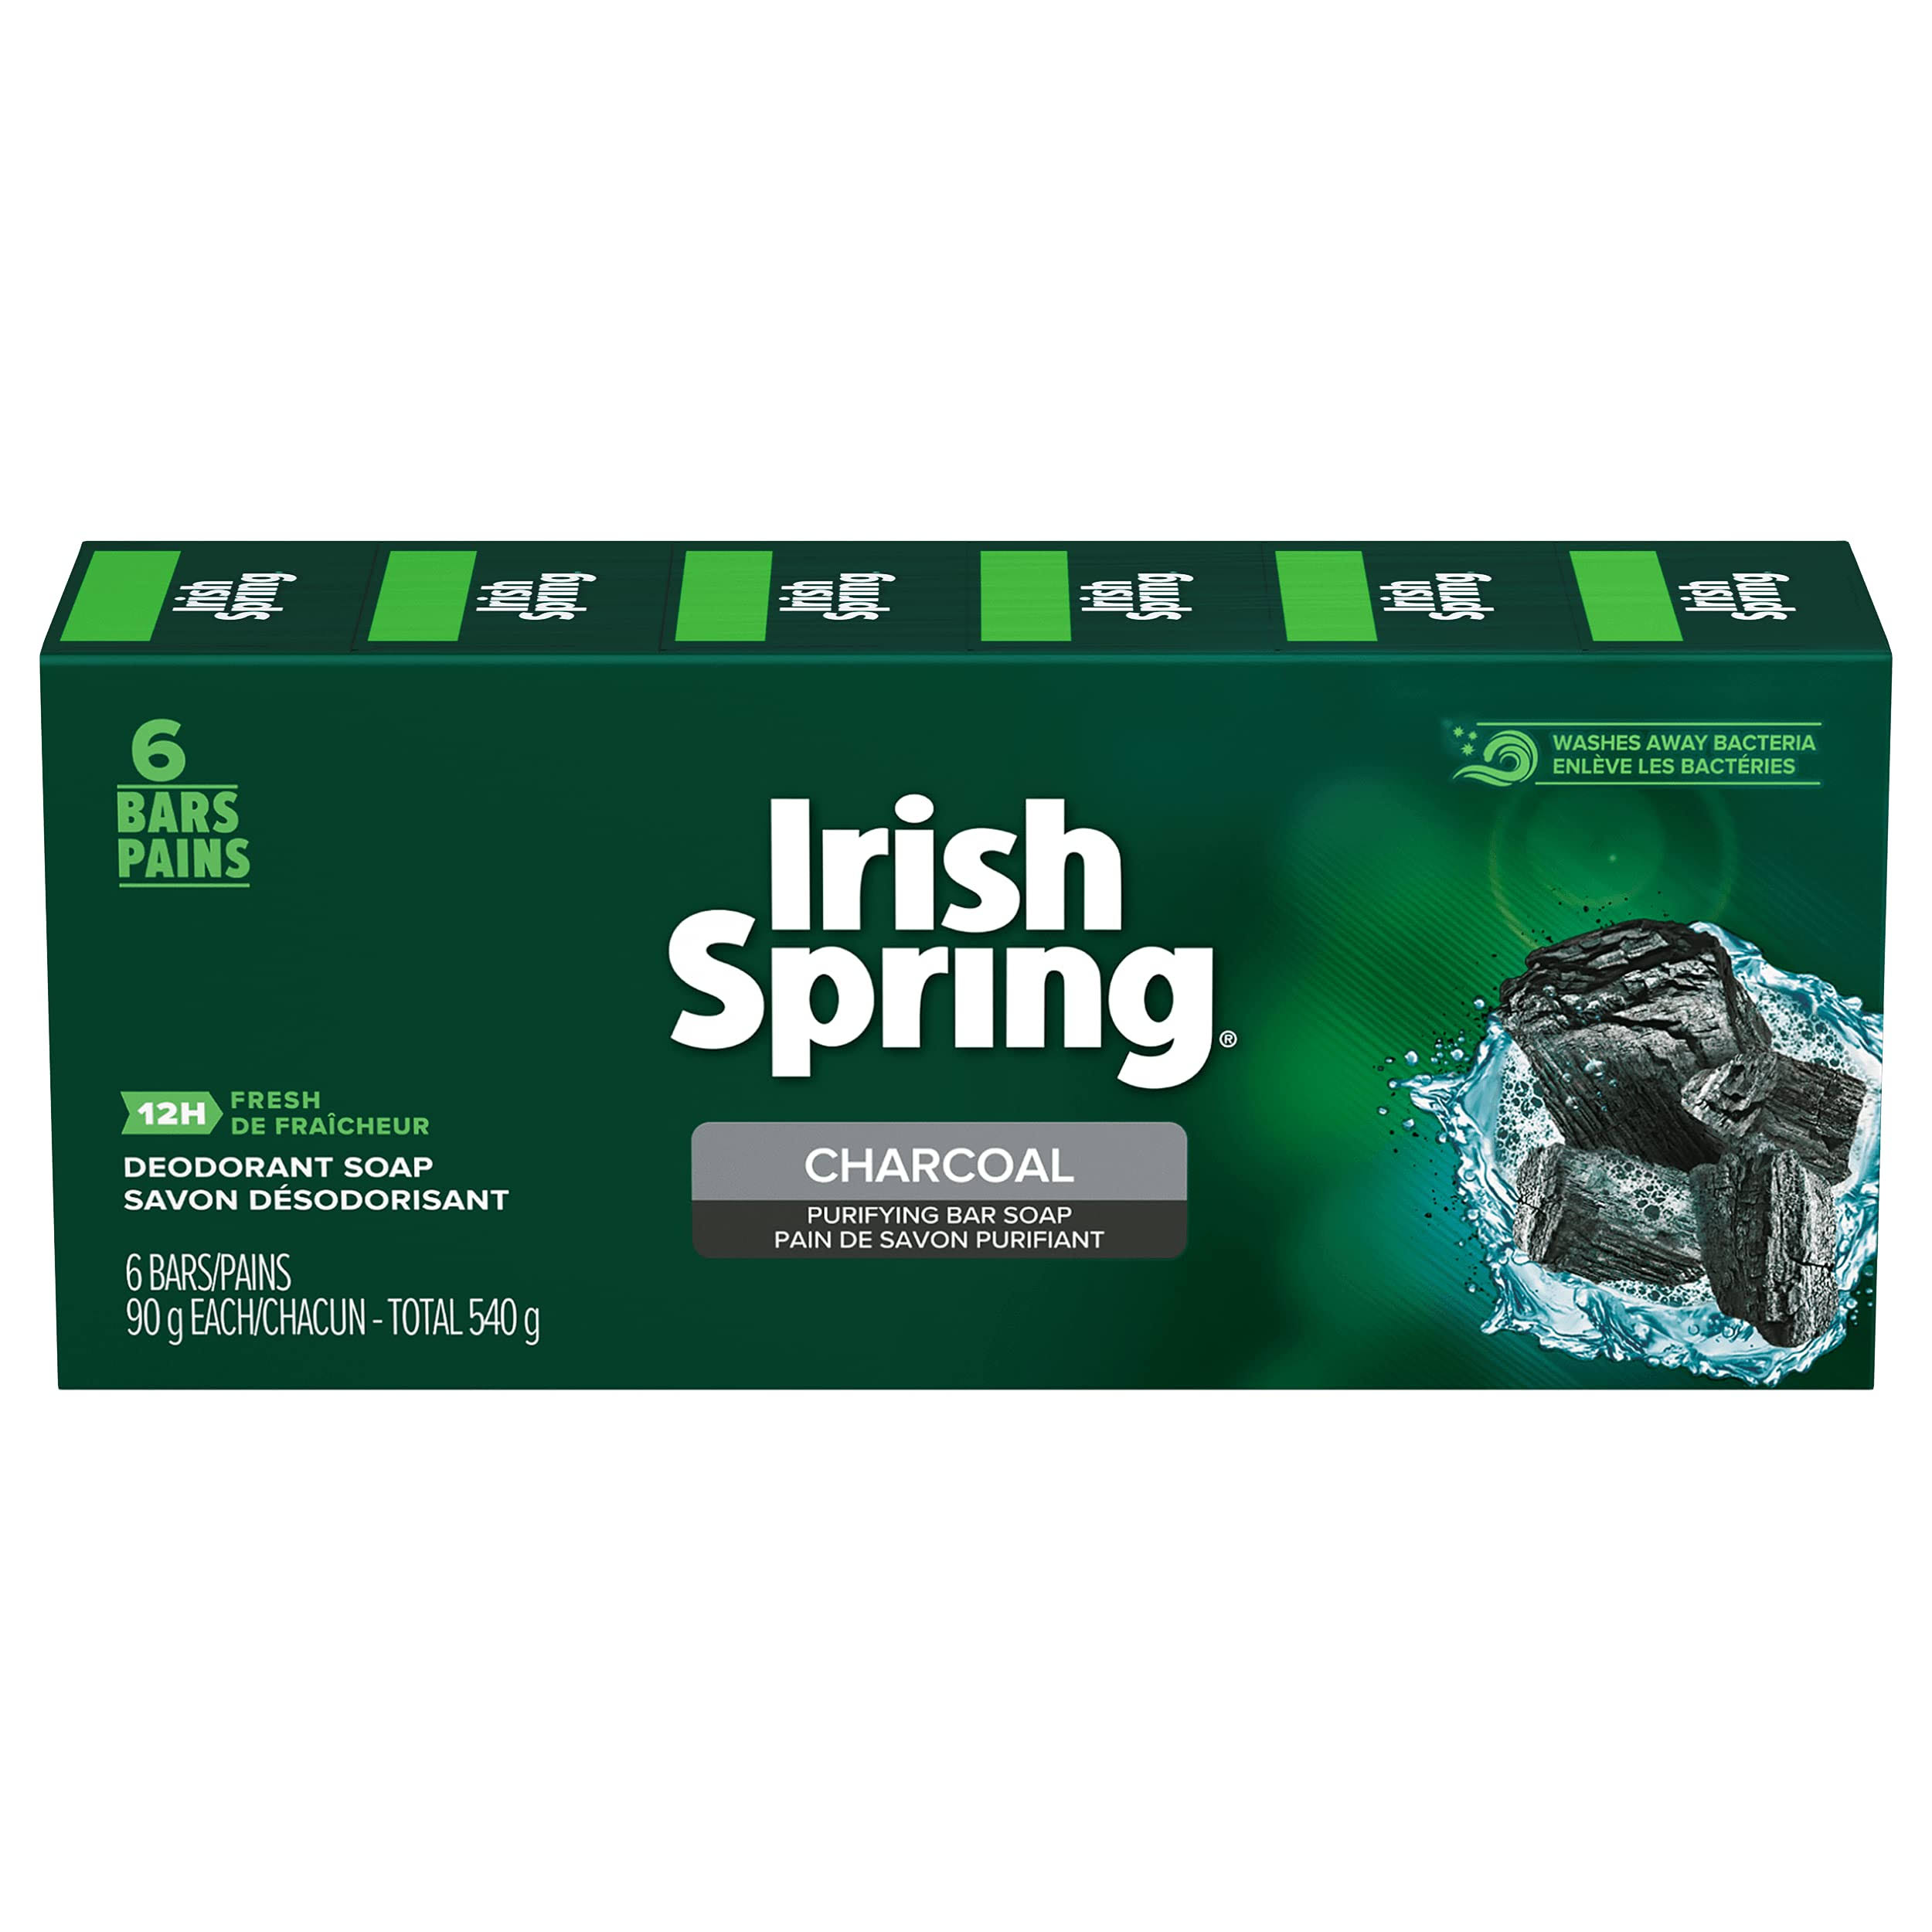 Irish Spring Charcoal Bar Soap, Body And Hand Soap Bar Washes Away Bacteria, 90G, 6 Bars